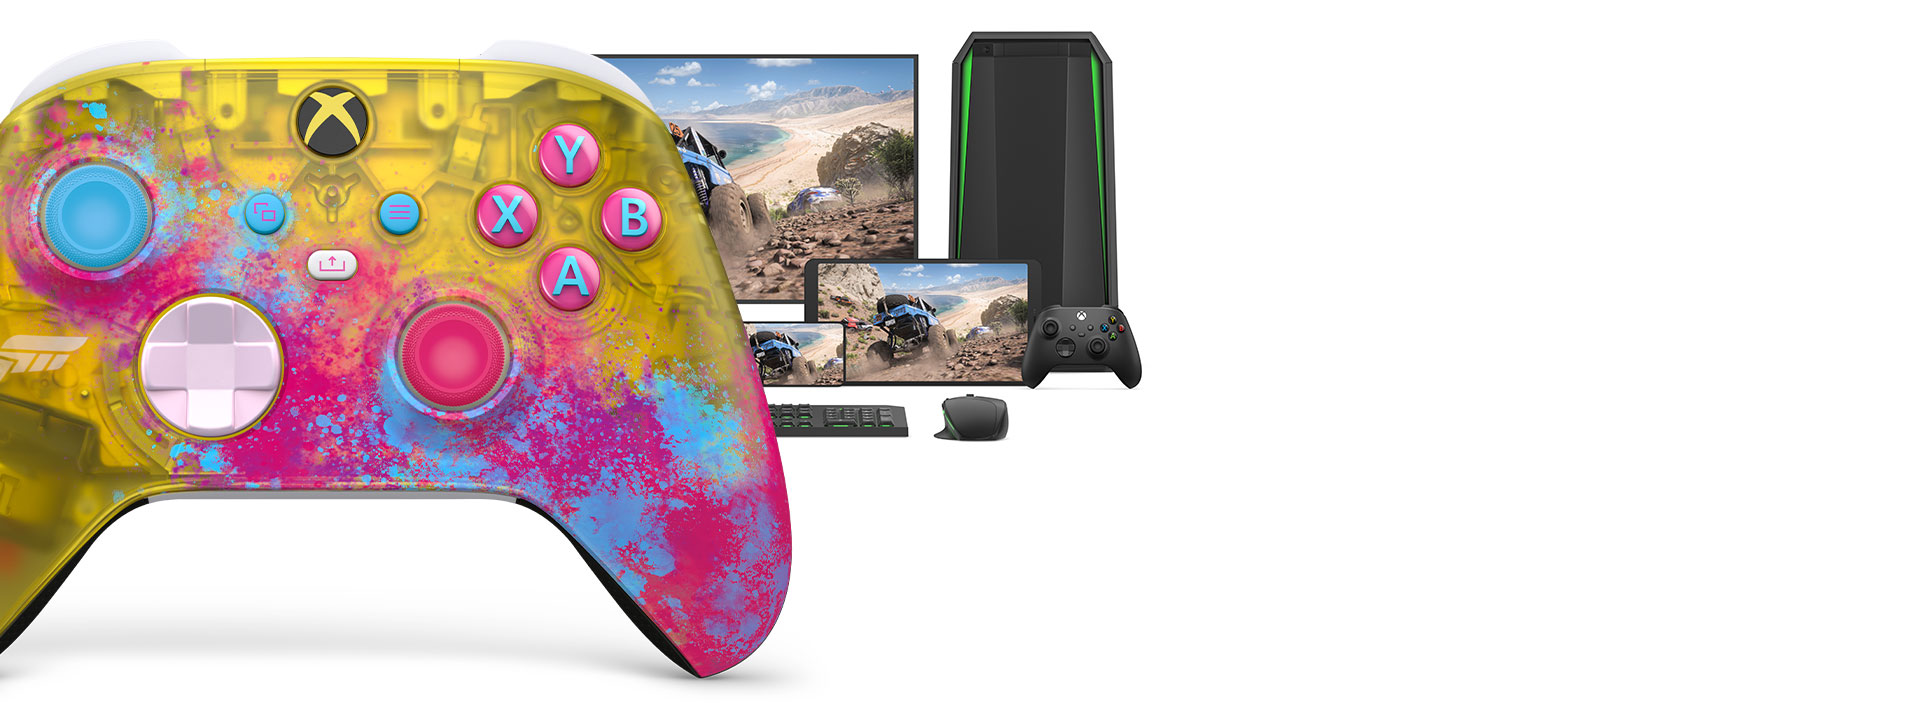 Xbox Wireless Controller – Forza Horizon 5 Limited Edition | Xbox